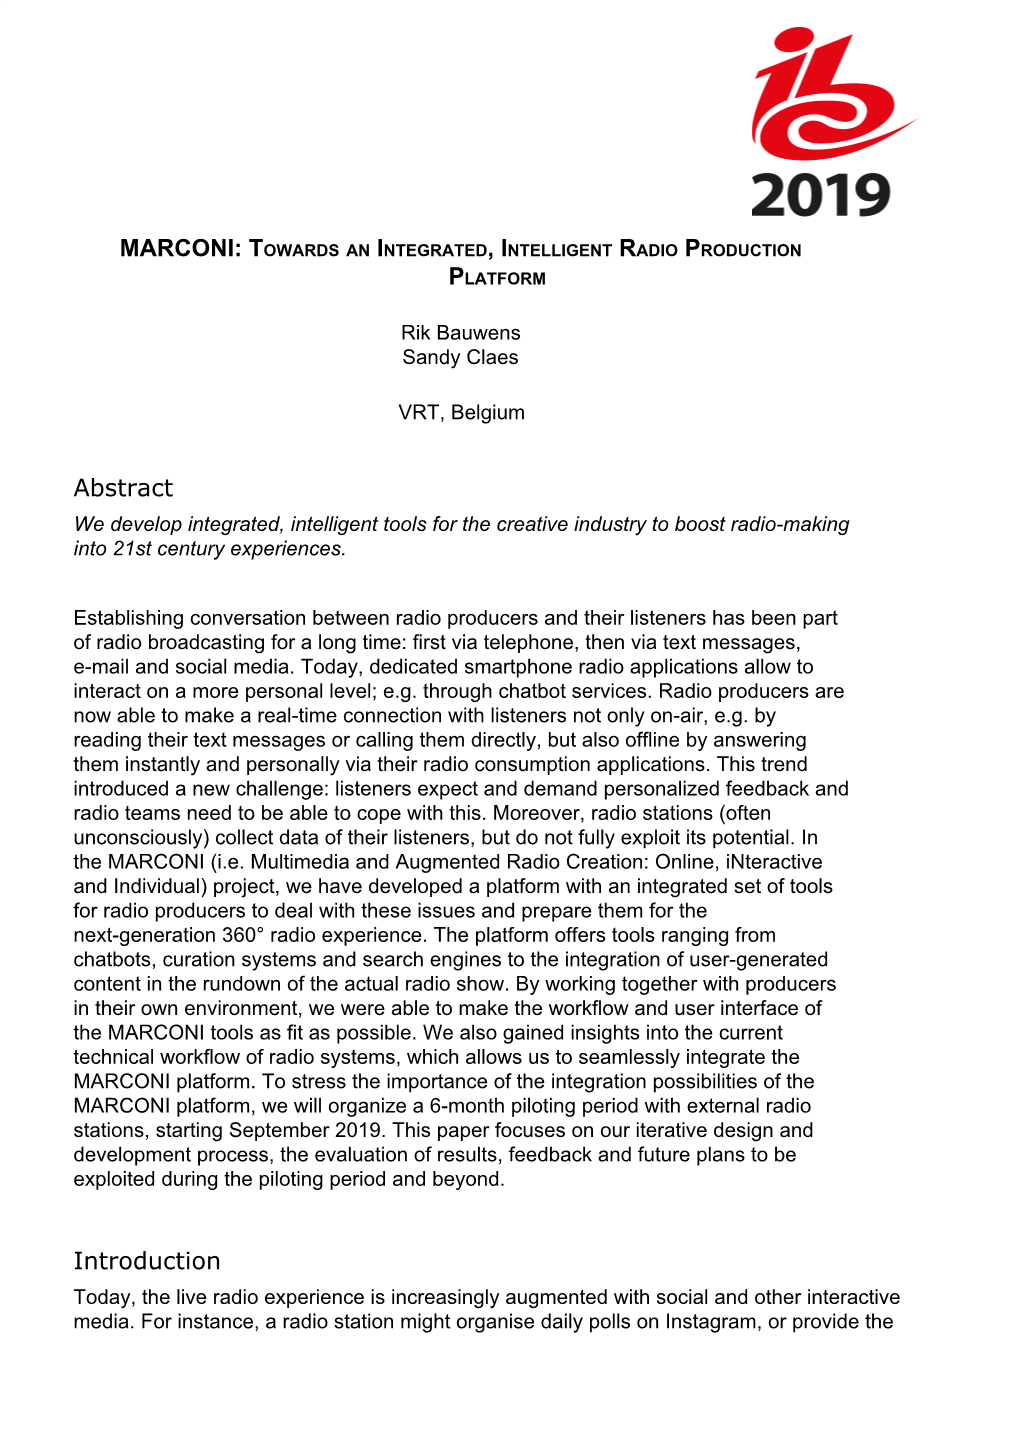 Marconi: Towards an Integrated, Intelligent Radio Production Platform